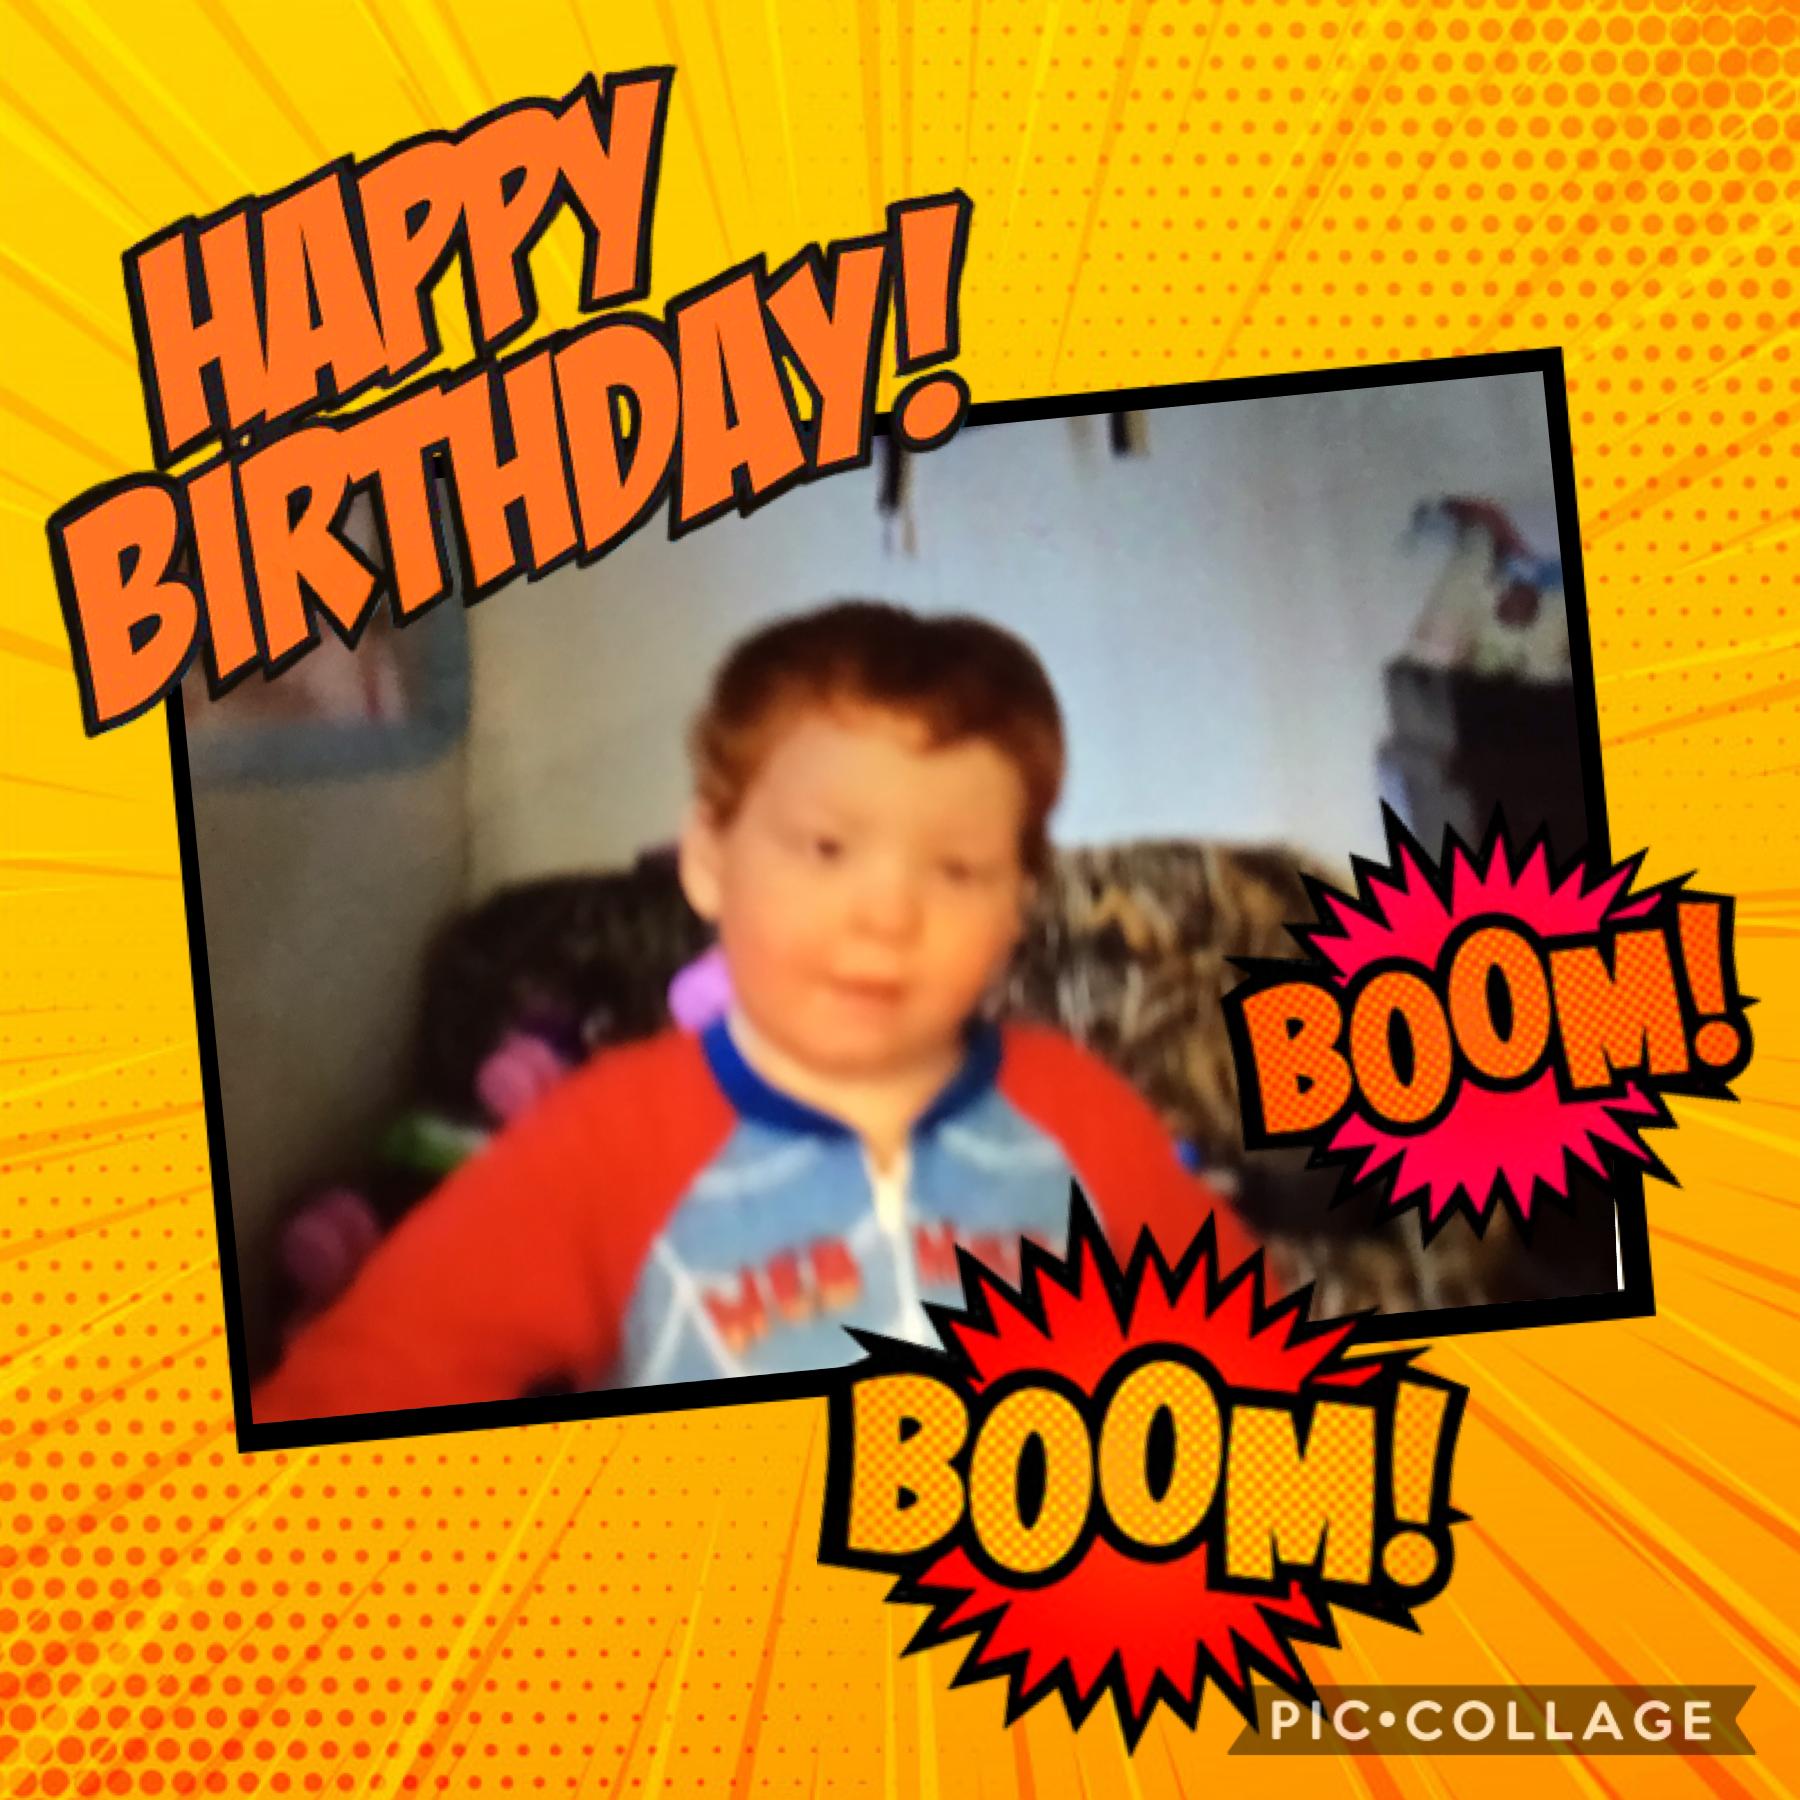 Happy birthday to my little brother happy birthday 
Flynn